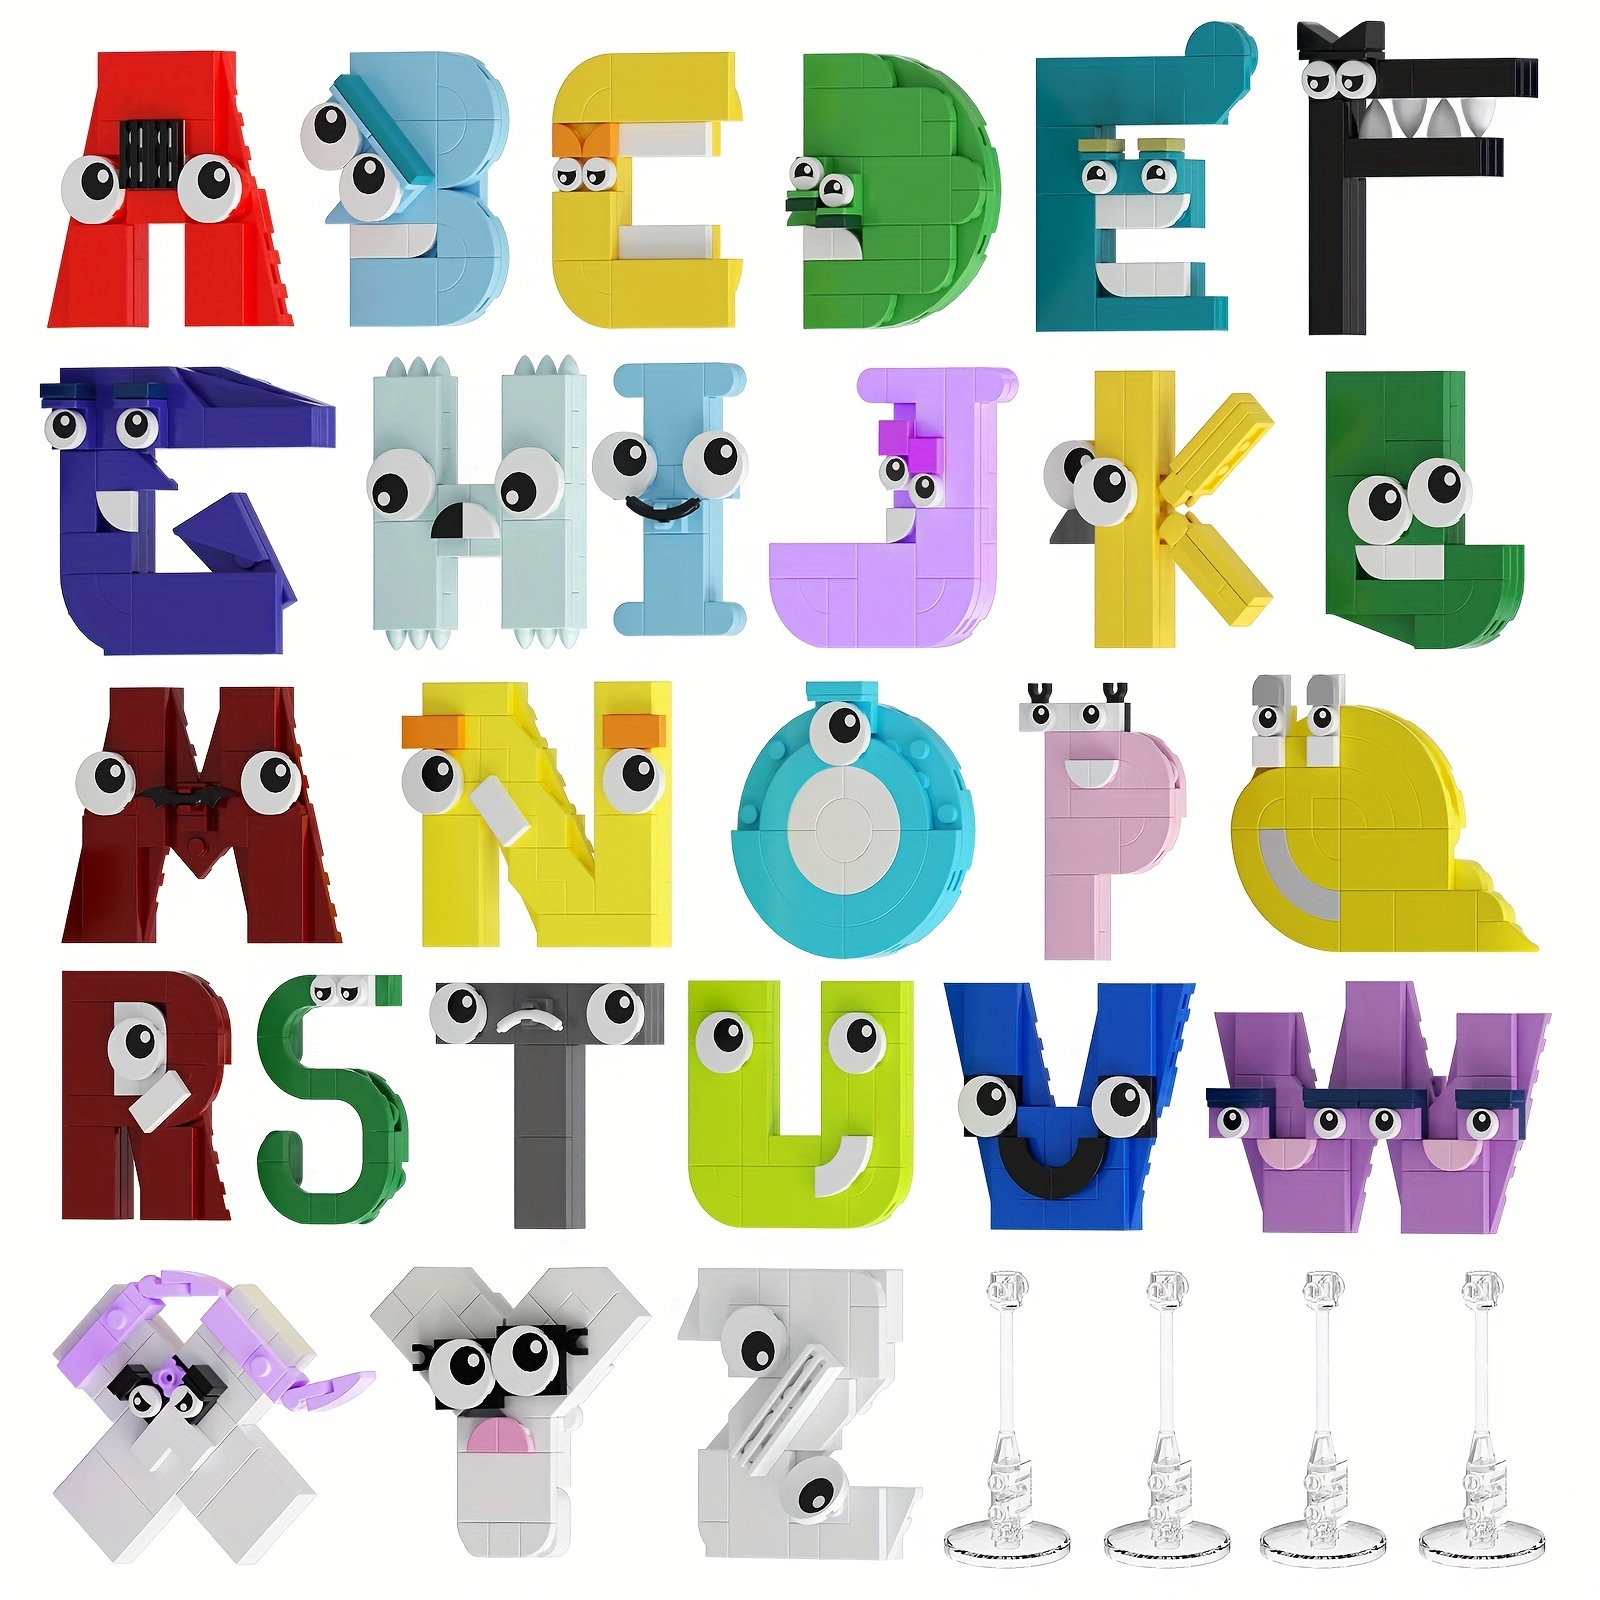 Alphabet Lore Keychain Figure Toys Cute A B C Ornament Bag Pendant